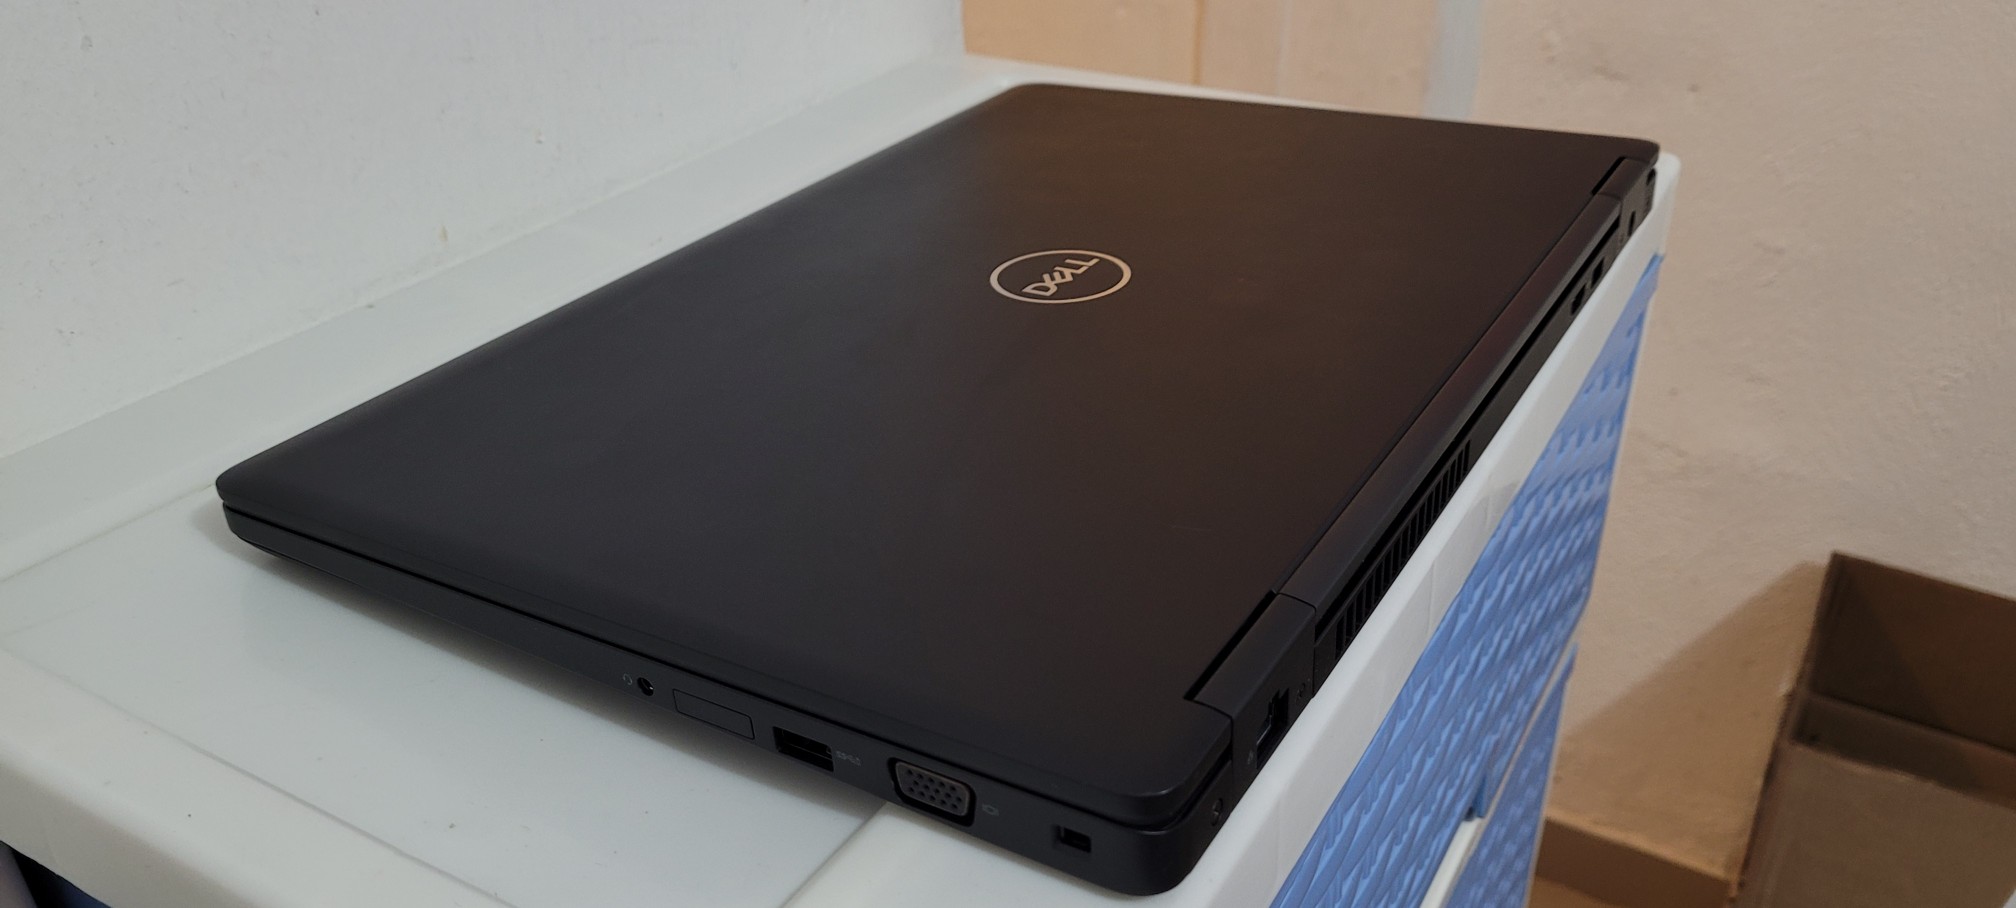 computadoras y laptops - Dell 5570 17 Pulg Core i7 6ta Ram 16gb Disco 256gb SSD Doble Tarjeta Grafica 2